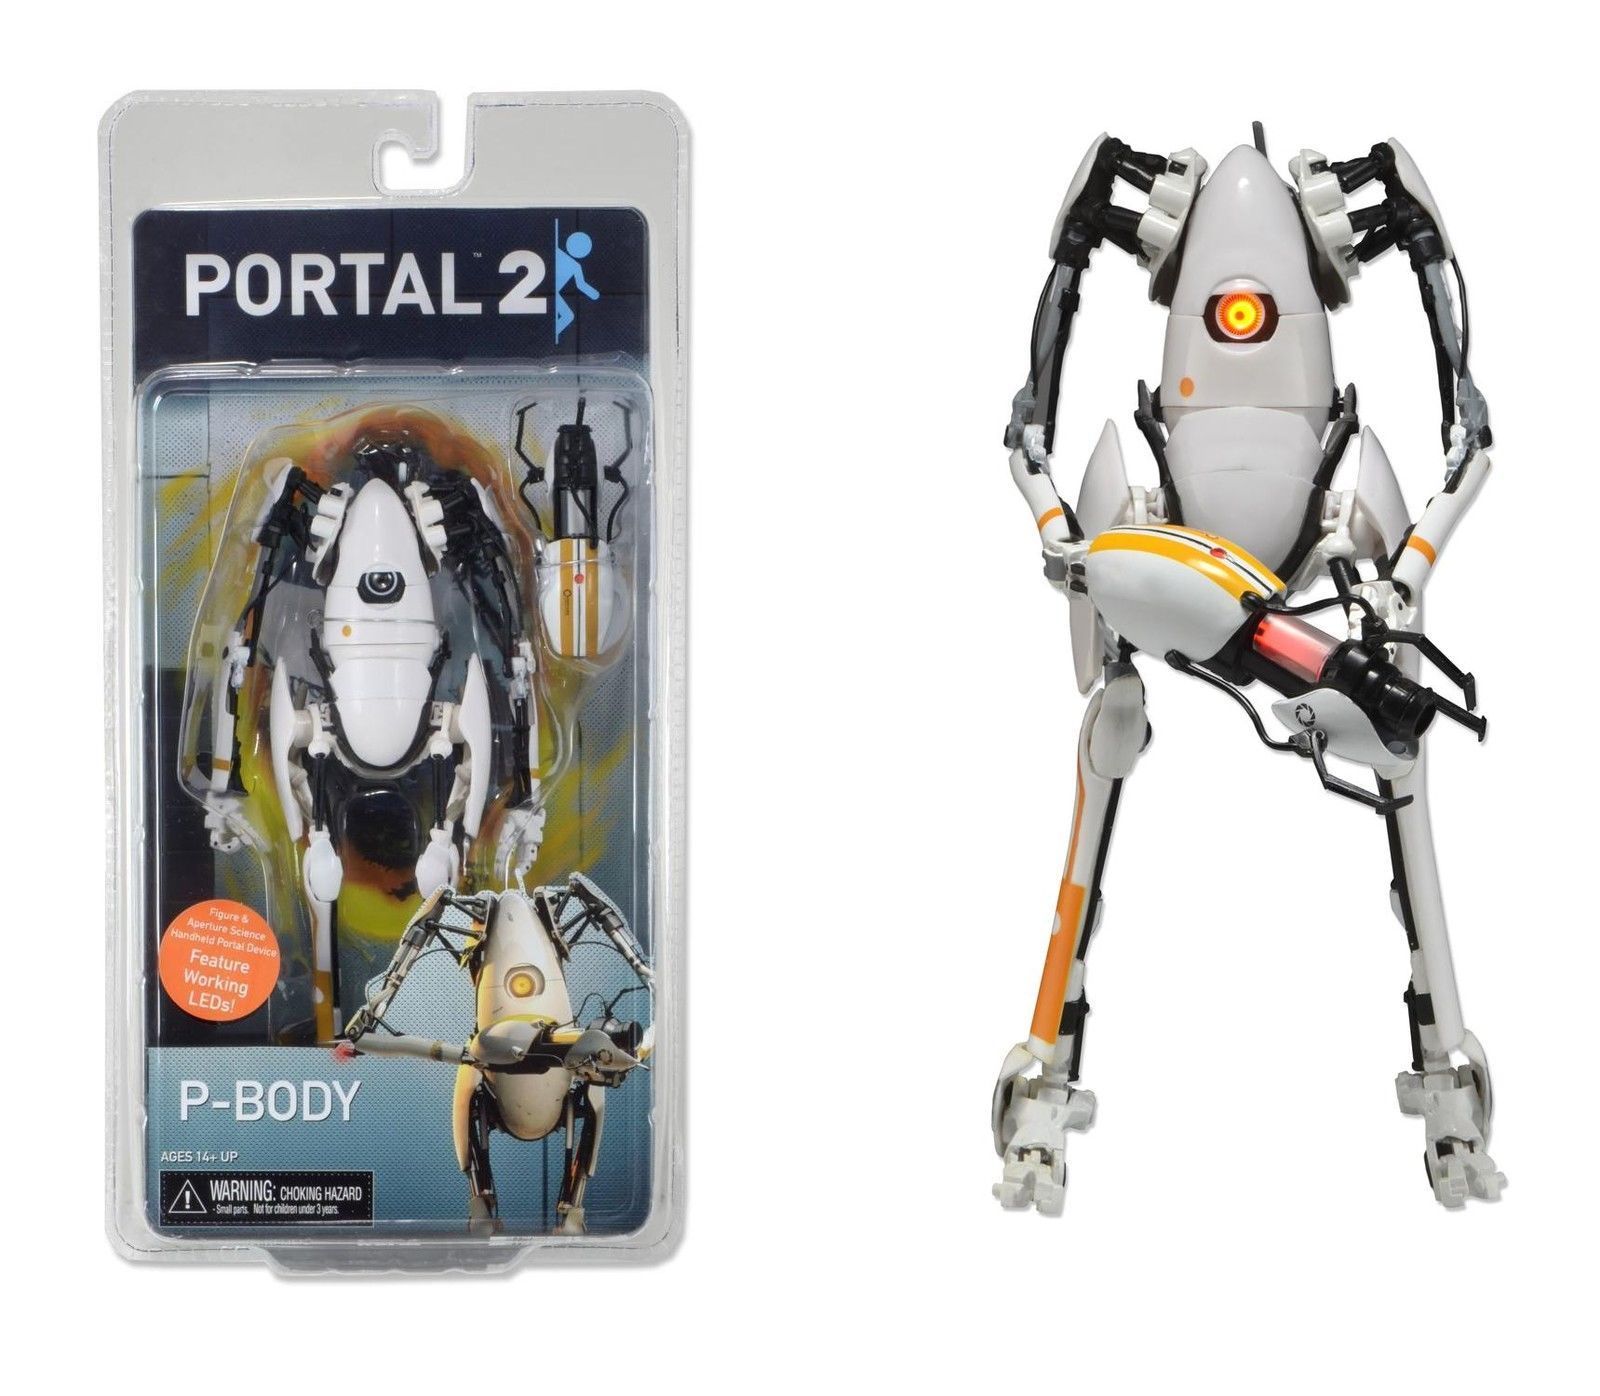 Portal 2 collector edition guide фото 65